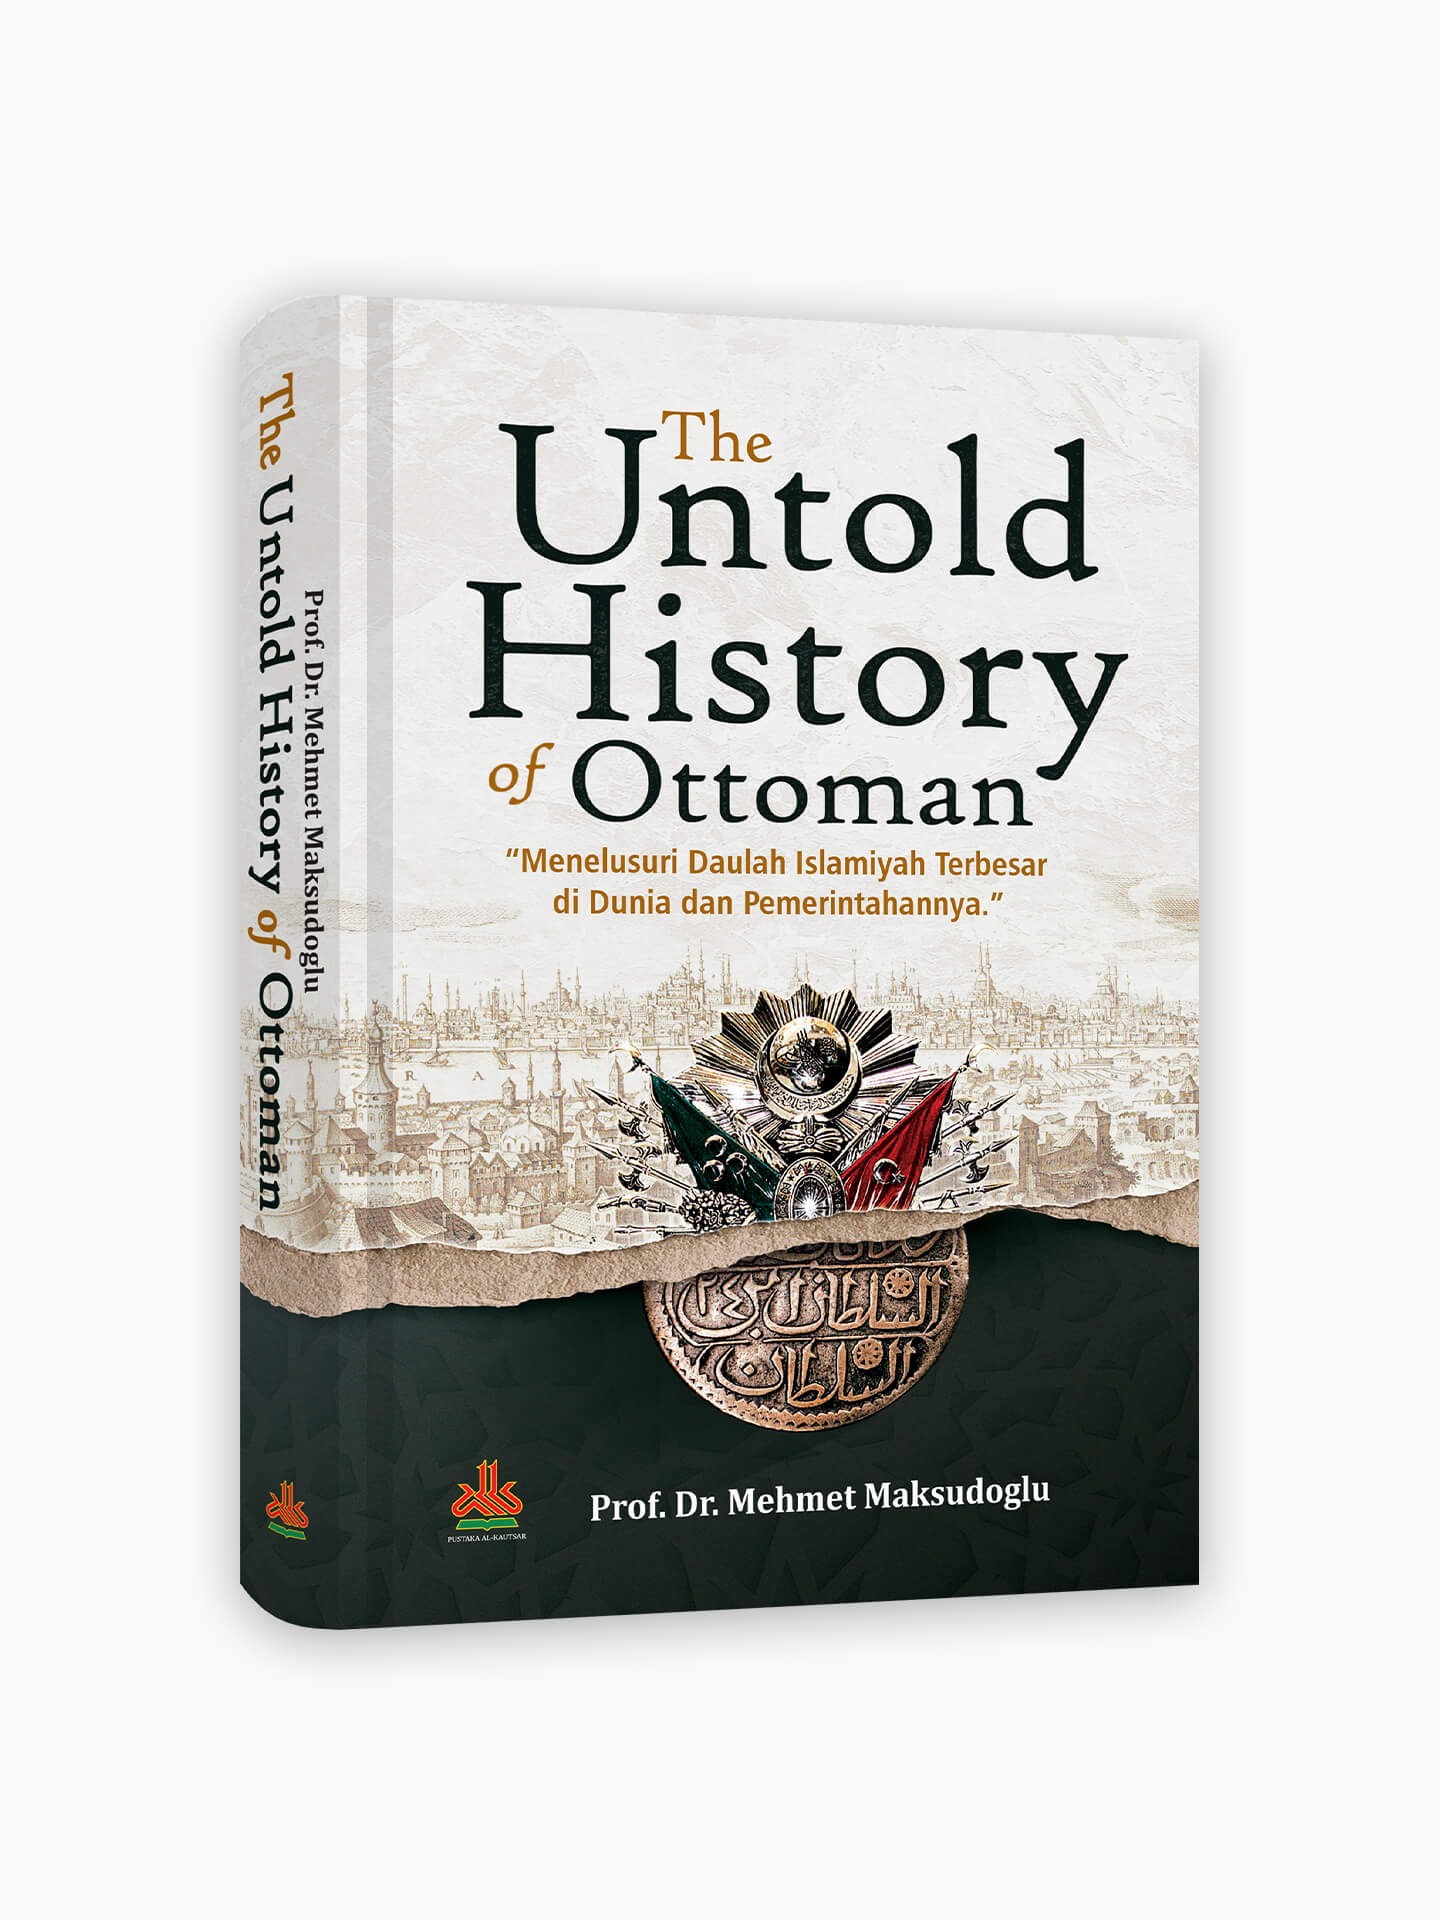 The Untold History of Ottoman